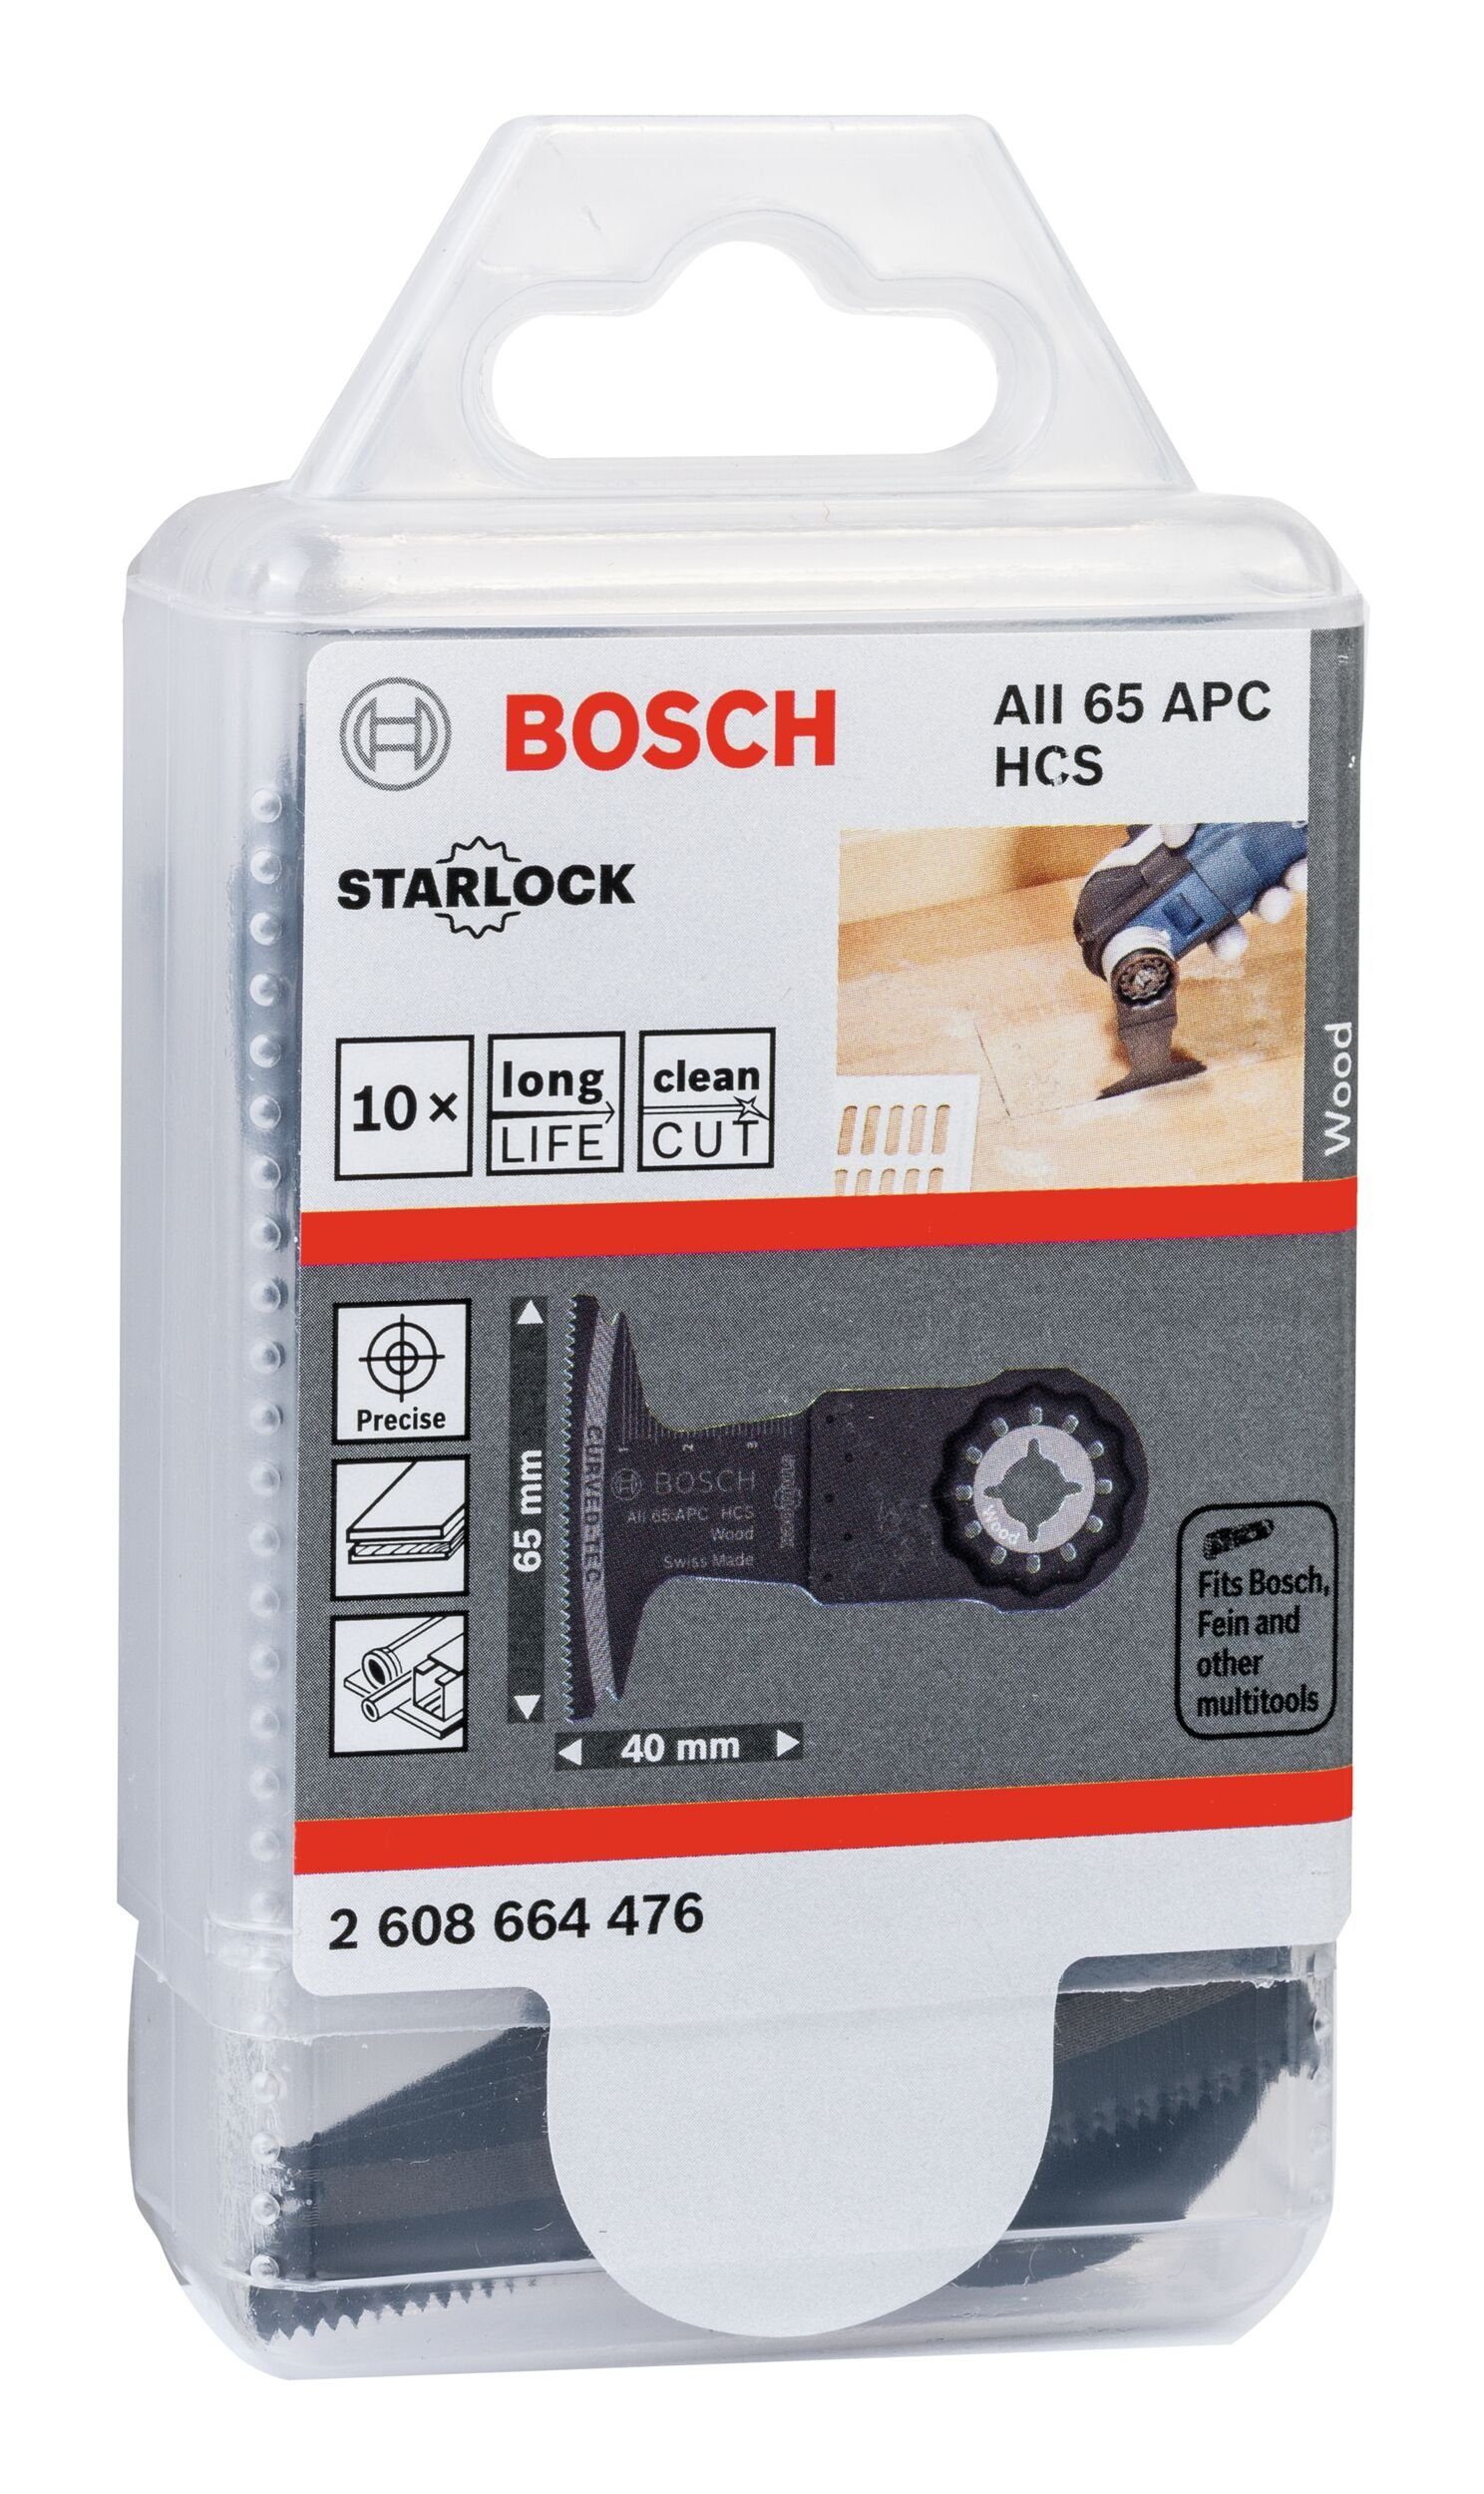 40 HCS BOSCH x 65 - 65 Tauchsägeblatt Stück), 10er-Pack Wood (10 mm - APC AII